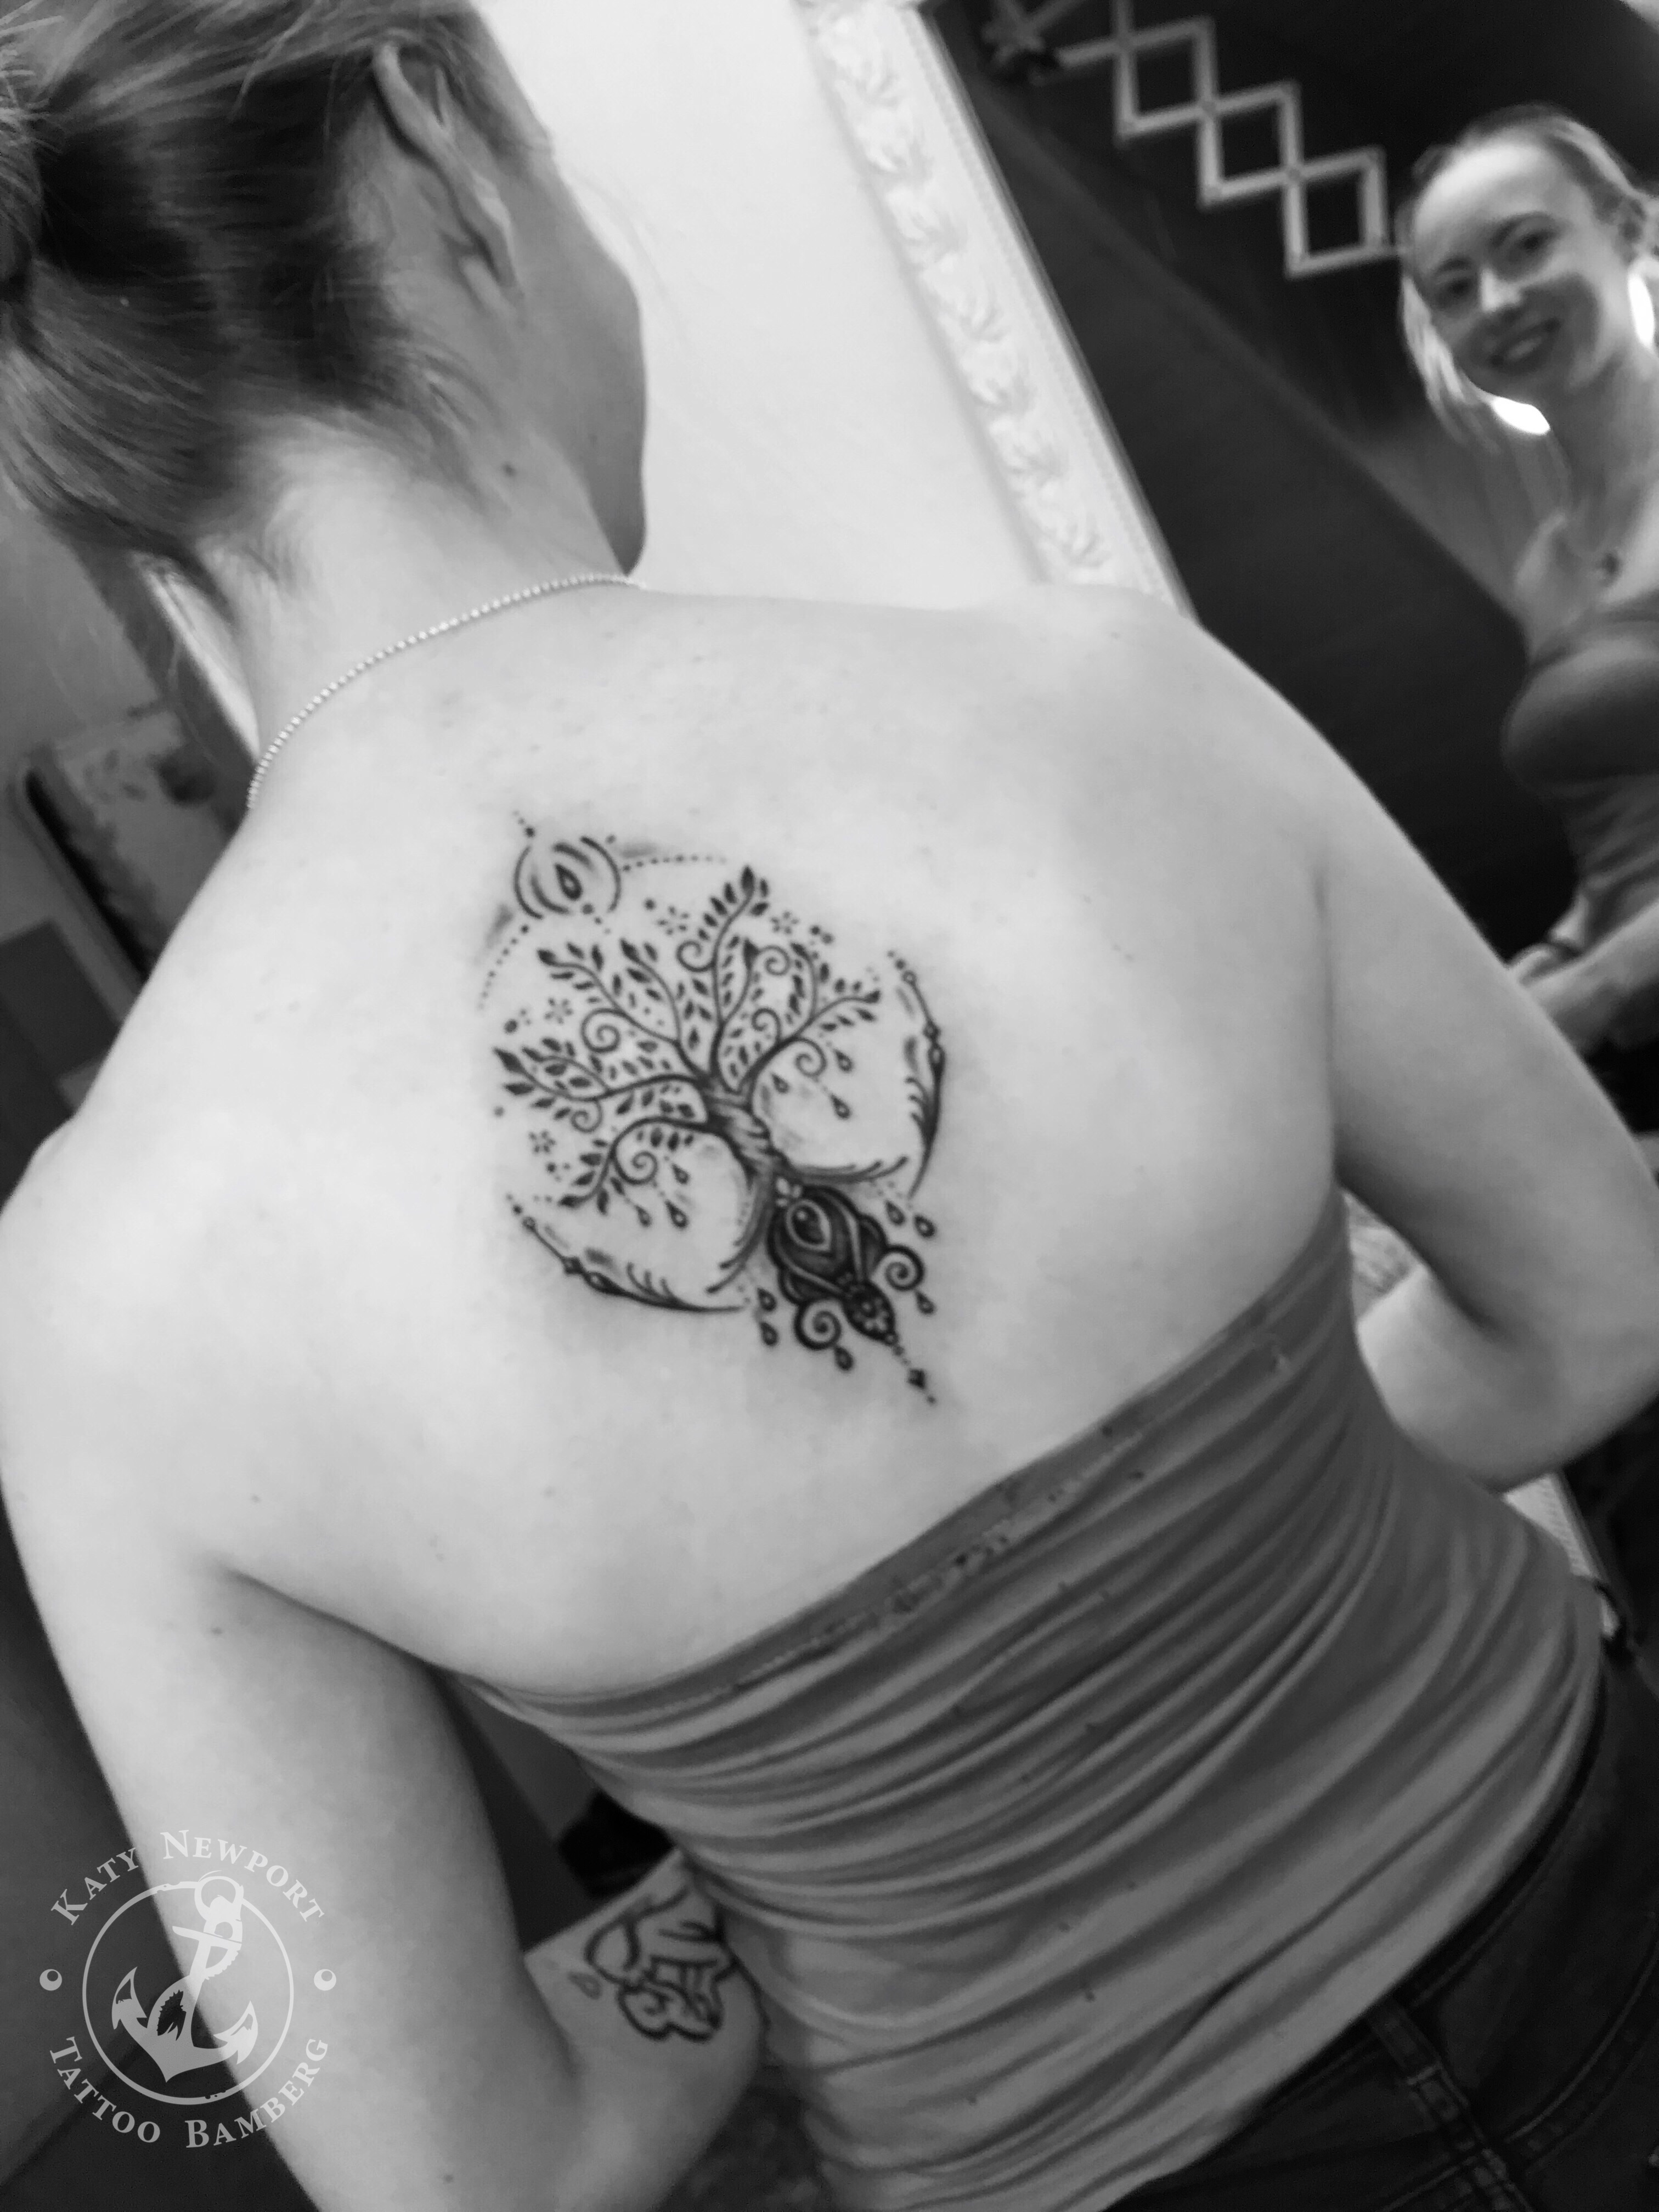 Katy Newport Tattoo Bamberg: Lebensbaumtattoo